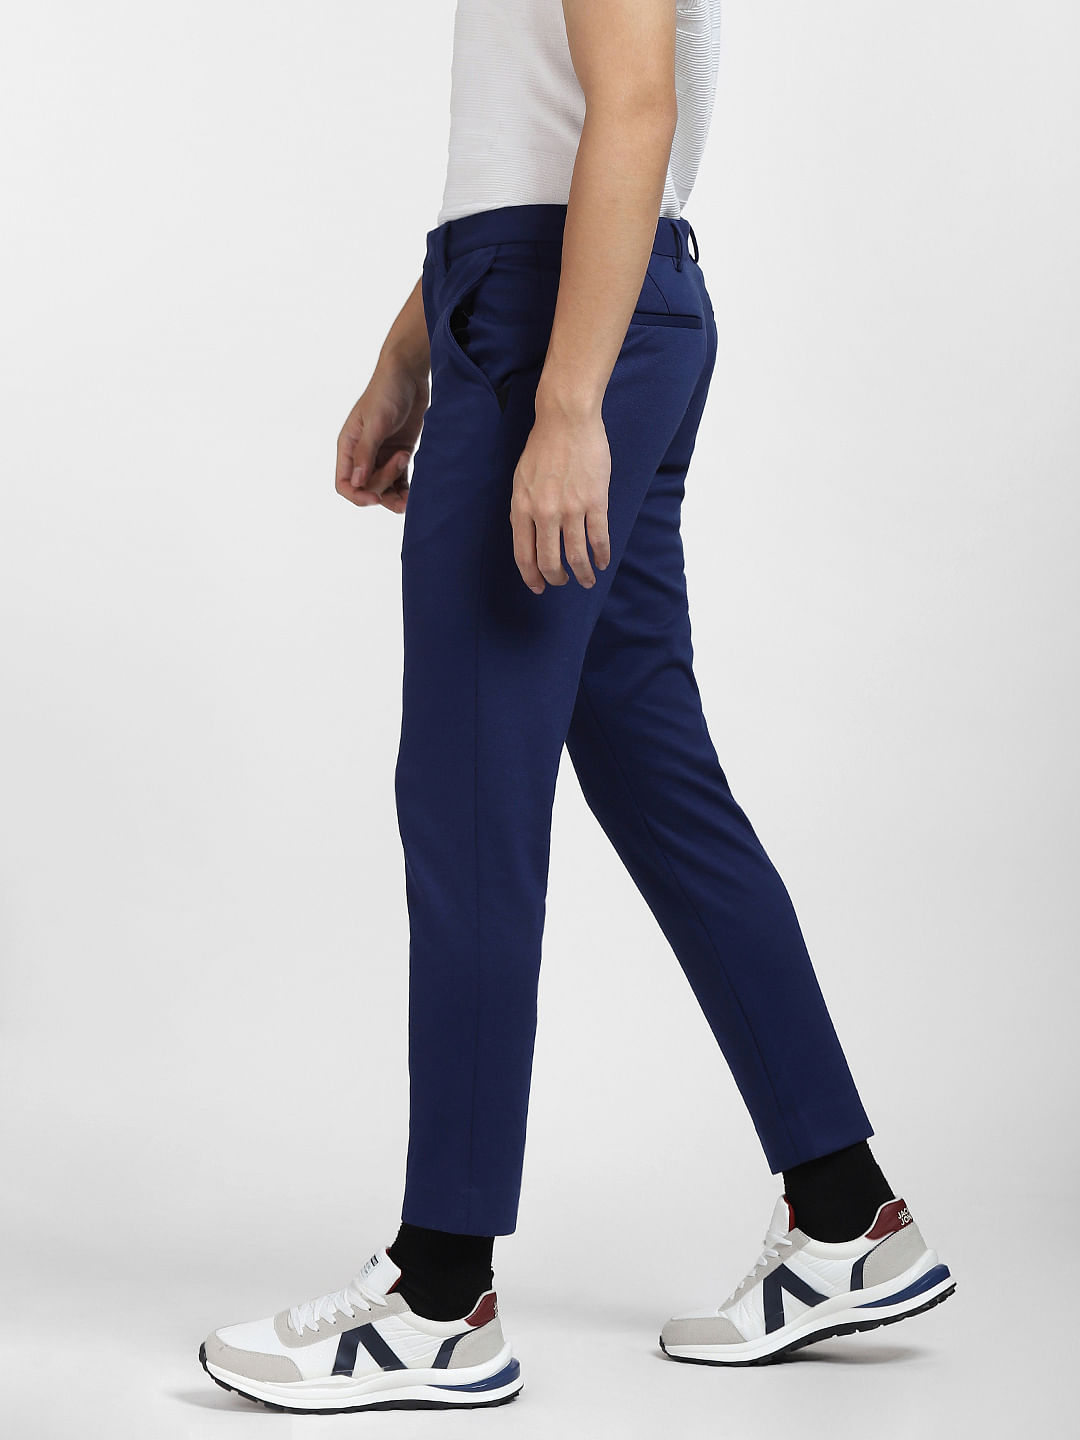 VERO MODA Trousers and Pants  Buy VERO MODA Women Solid Blue Pant Online   Nykaa Fashion